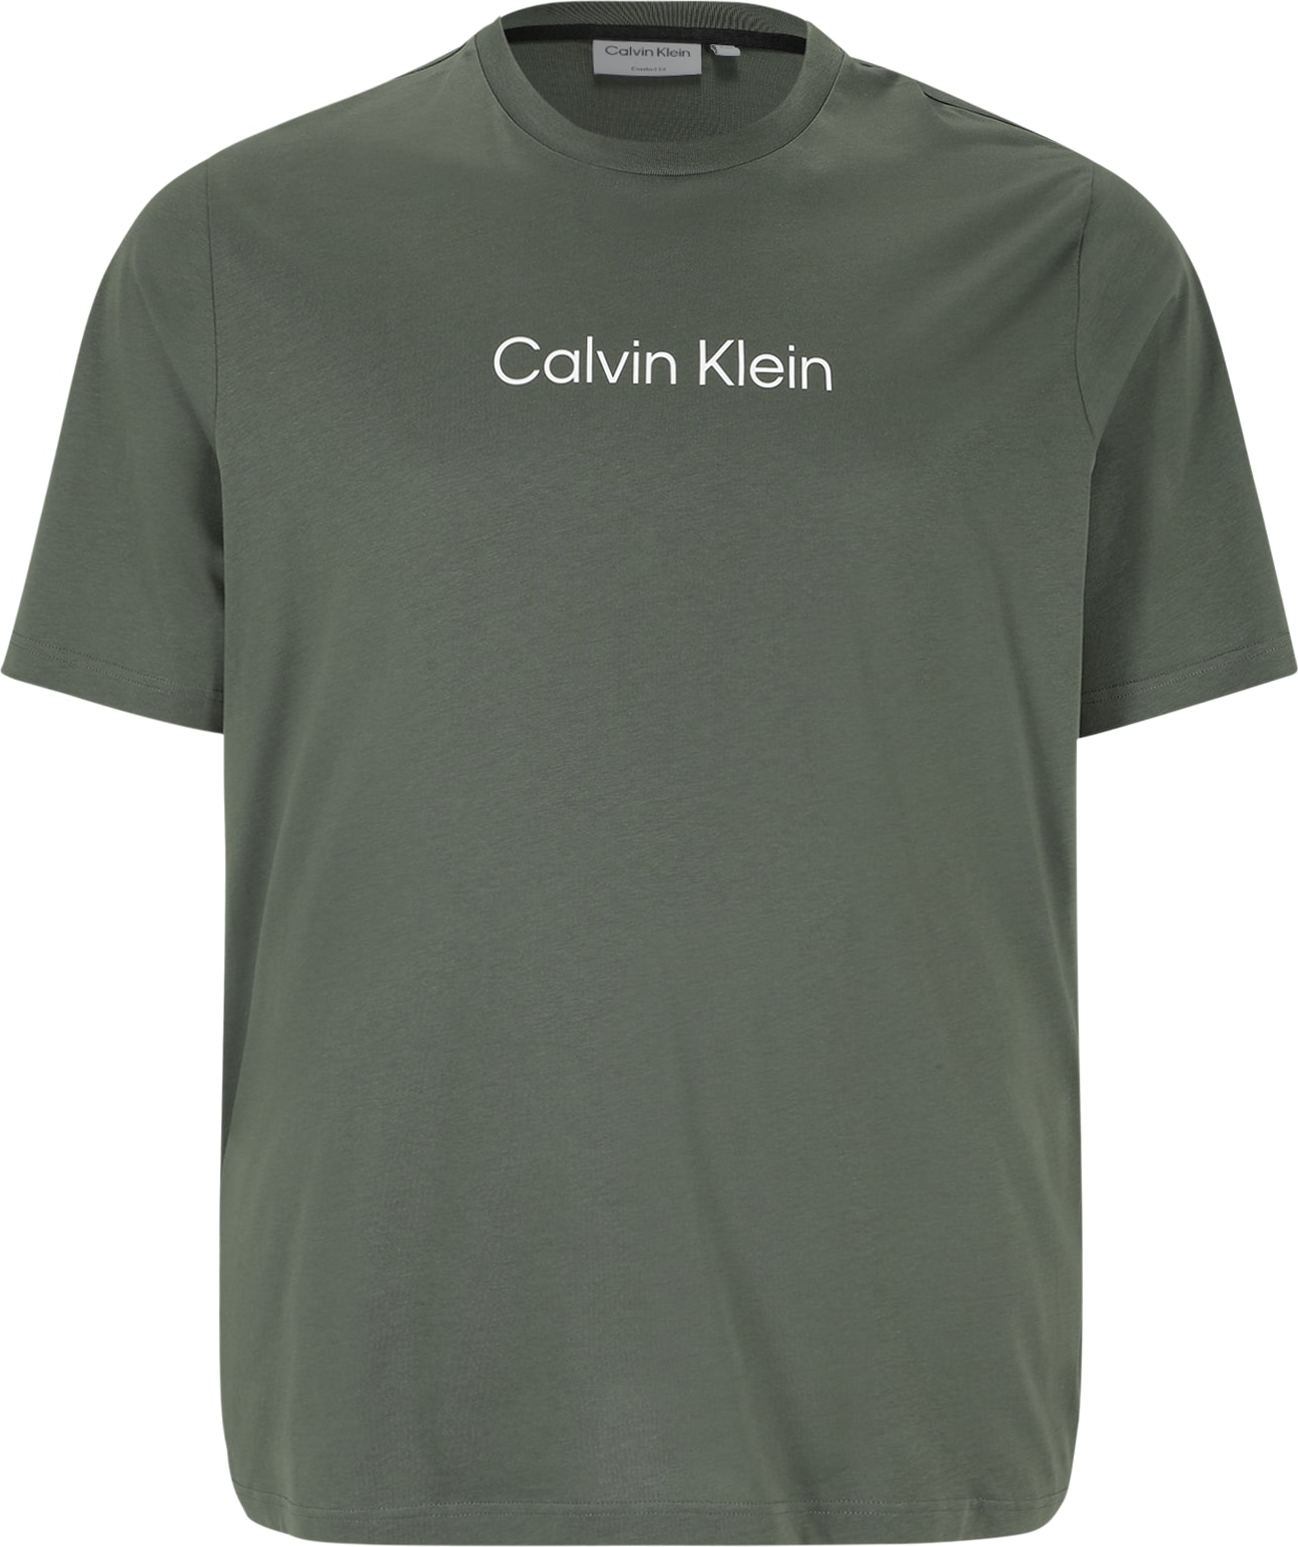 Tričko Calvin Klein Big & Tall tmavě zelená / bílá